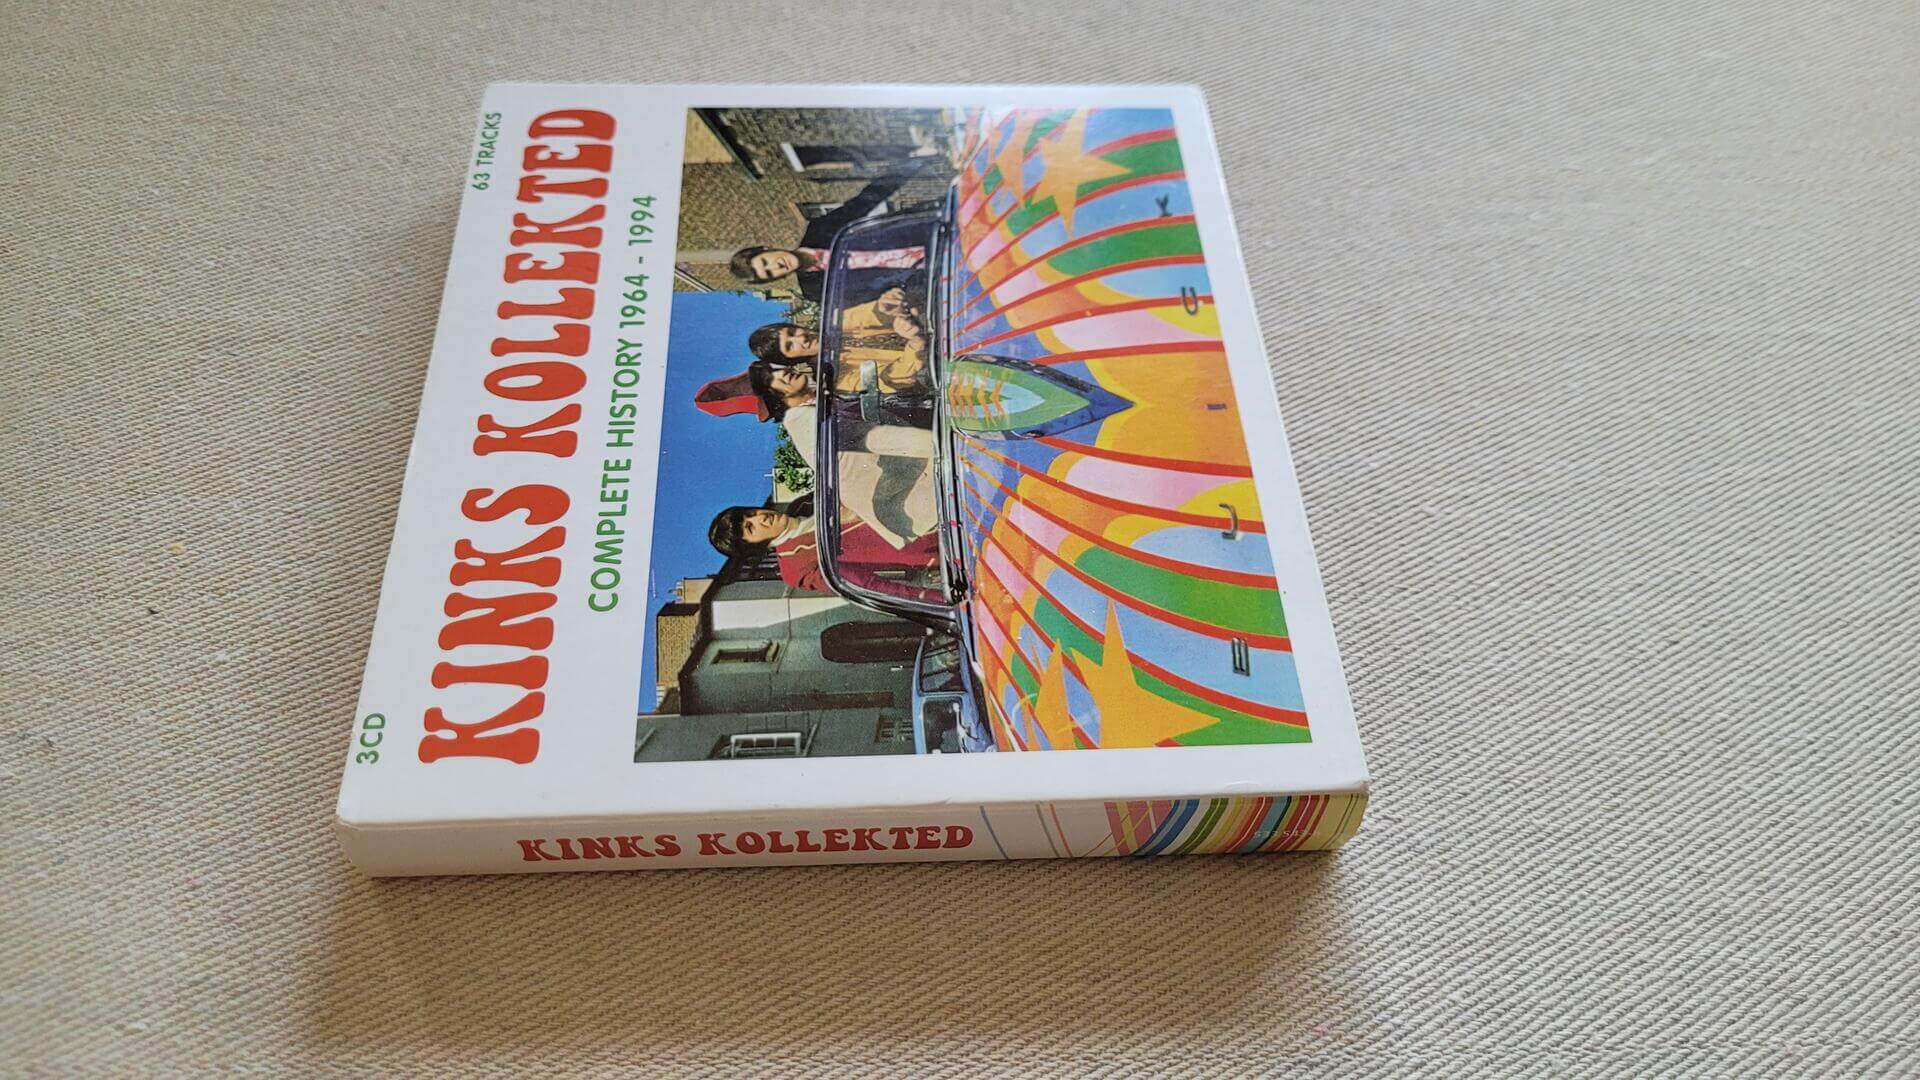 kinks-kollekted-complete-history-1964-1994-3-cd-music-set-side-view